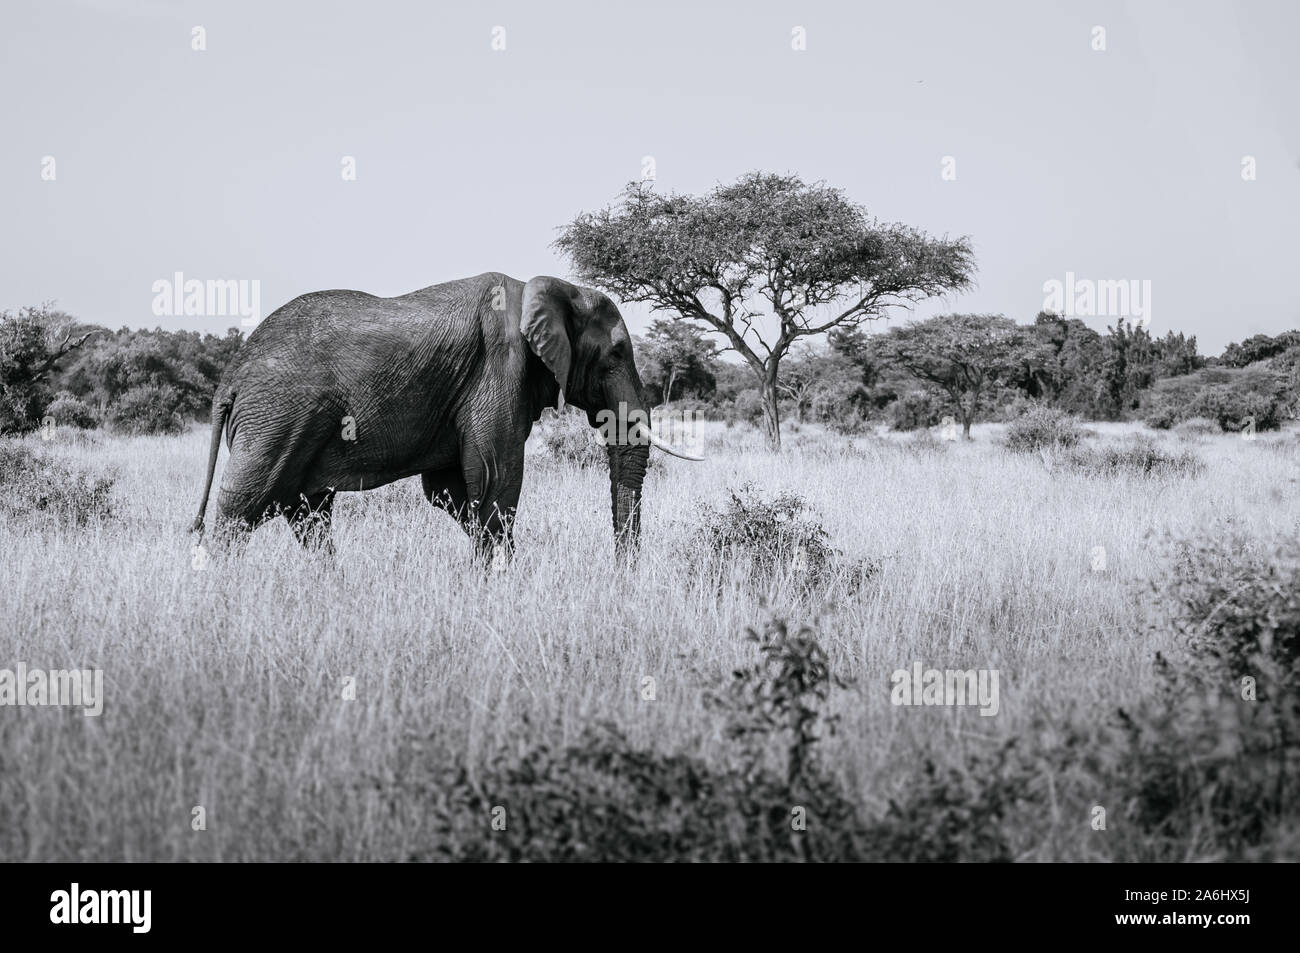 Big African elephant in golden grass field of Serengeti Grumeti reserve Savanna forest - African Tanzania Safari wildlife trip during great migration Stock Photo